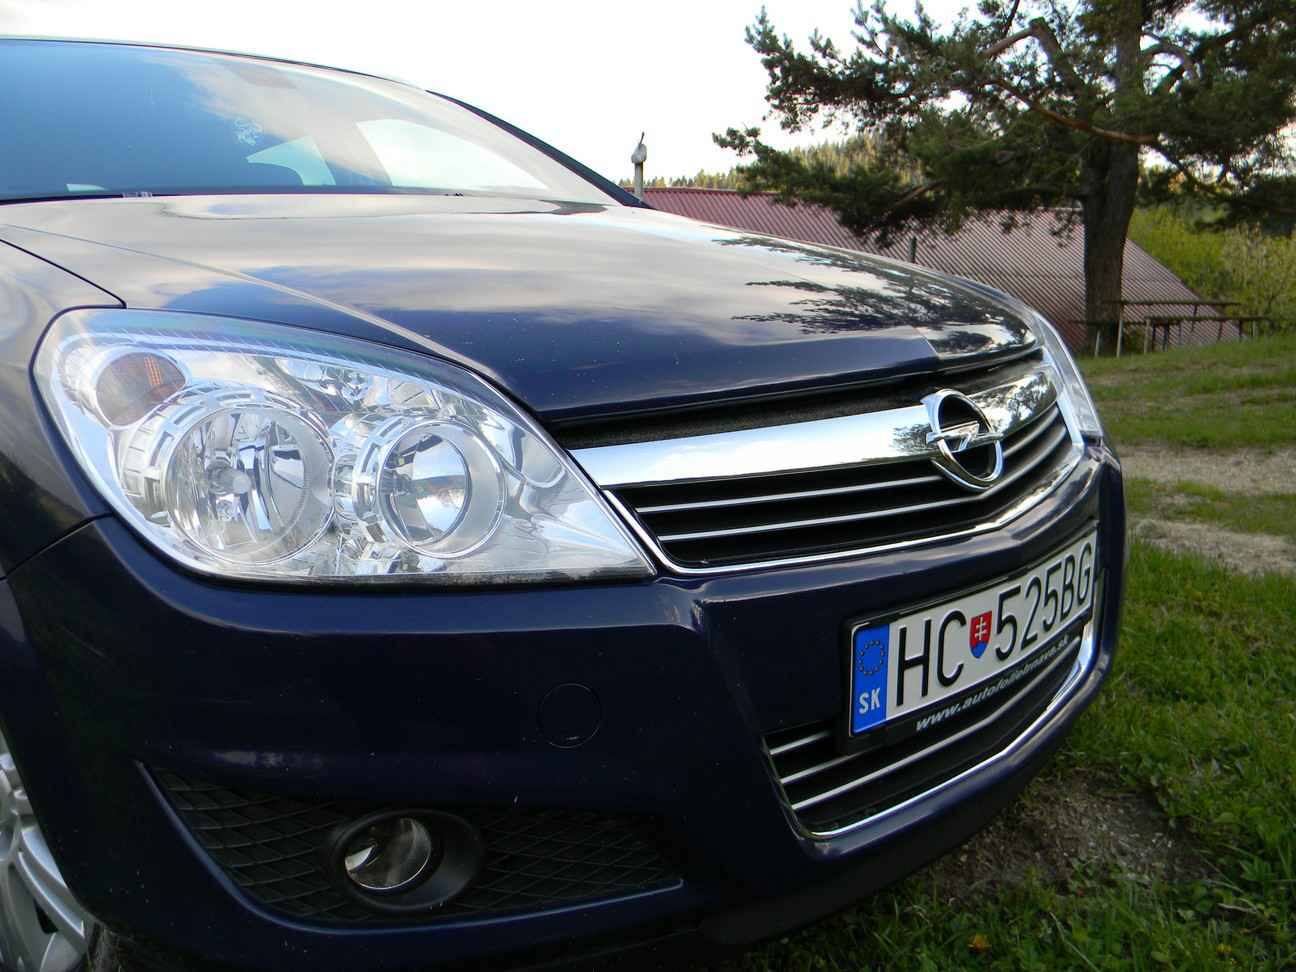 Q-čkové H-čko - Opel Astra Caravan 1.7CDTi 